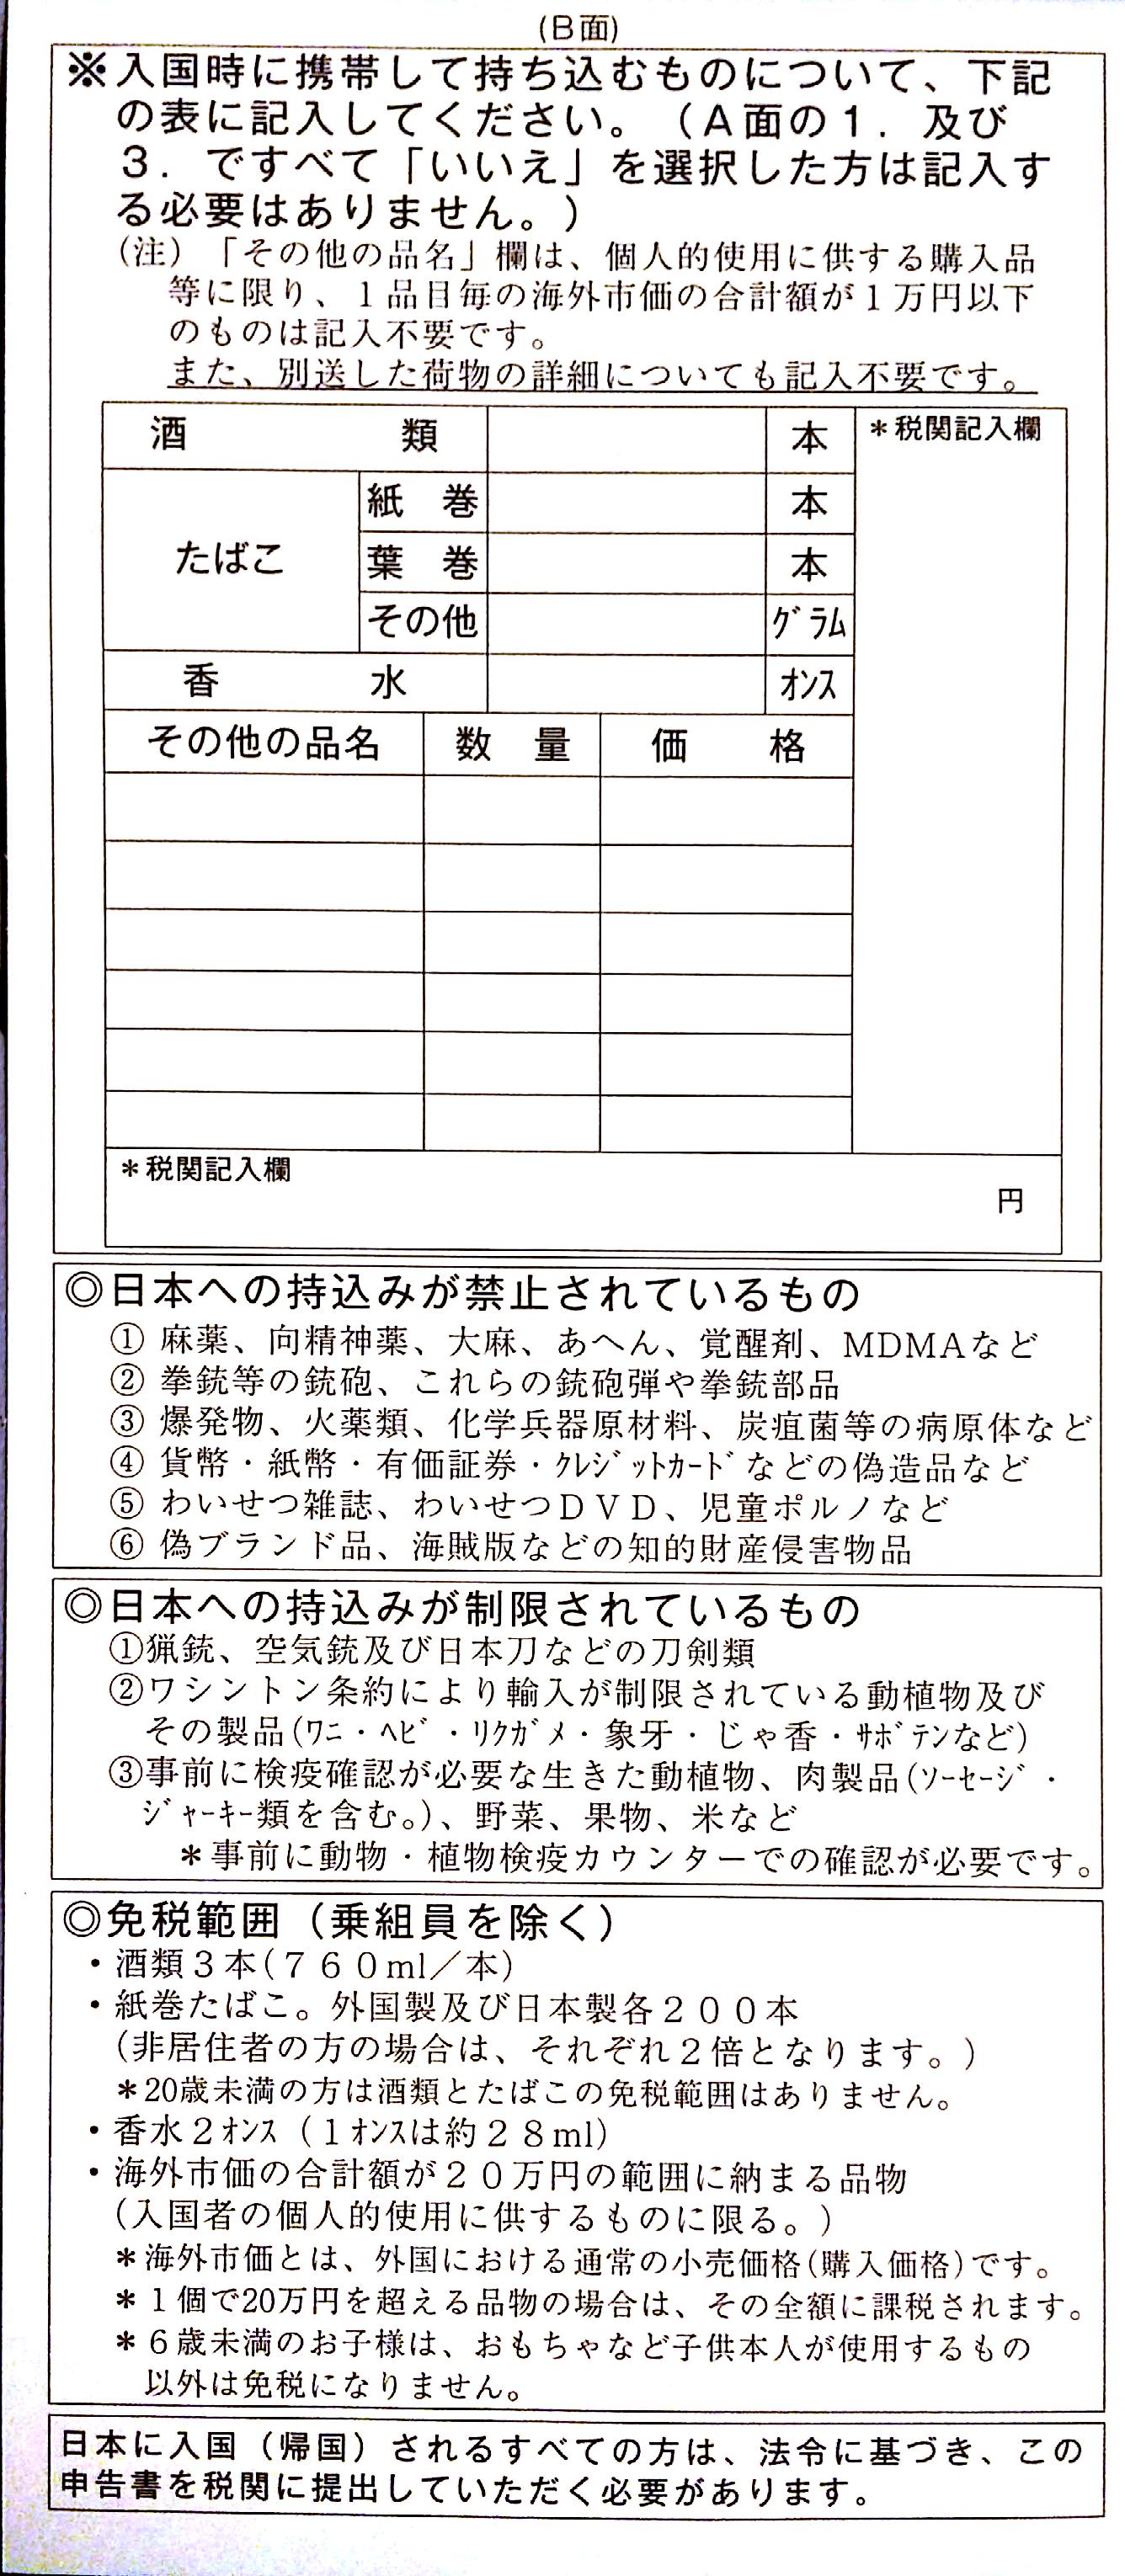 japan travel customs form